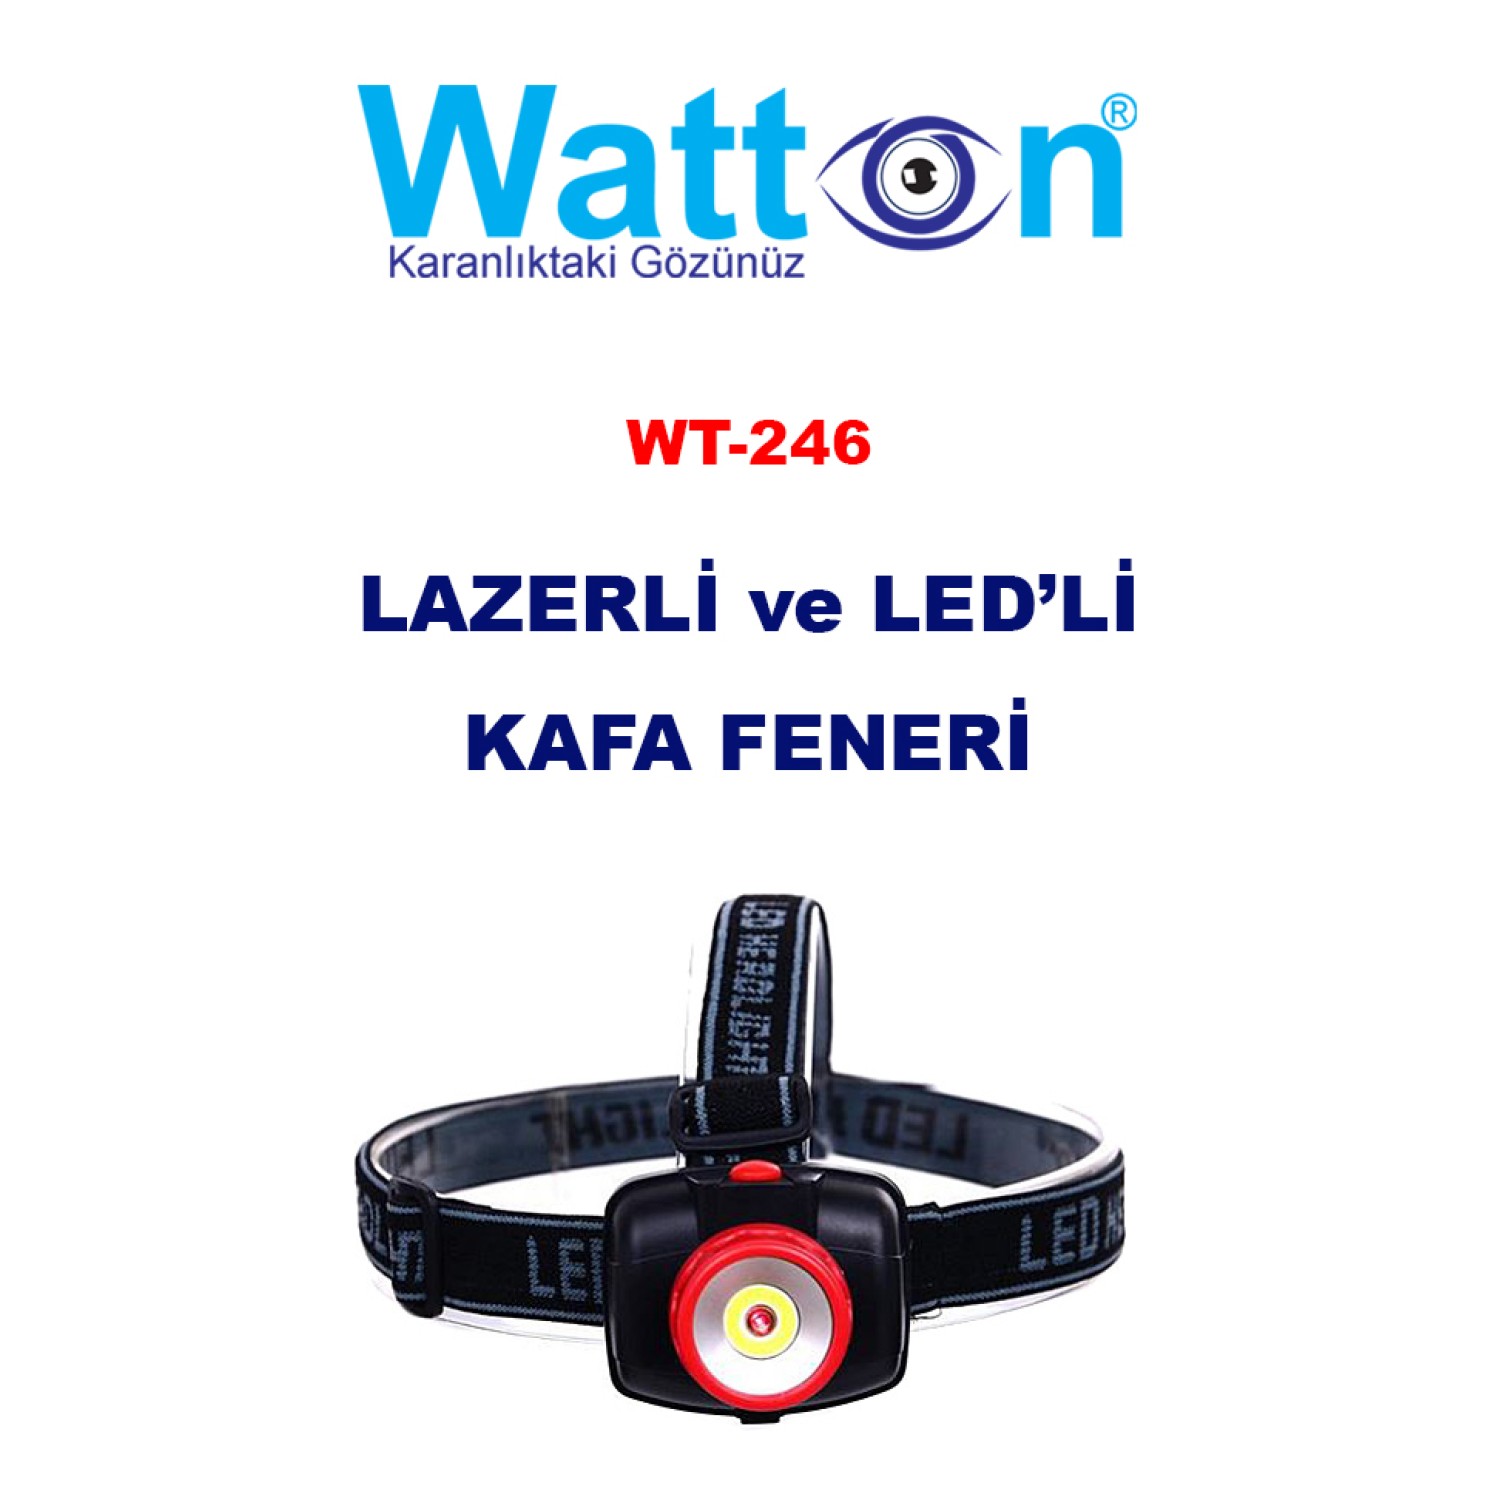 Watton WT-246 Lazerli Ledli Kafa Lambası